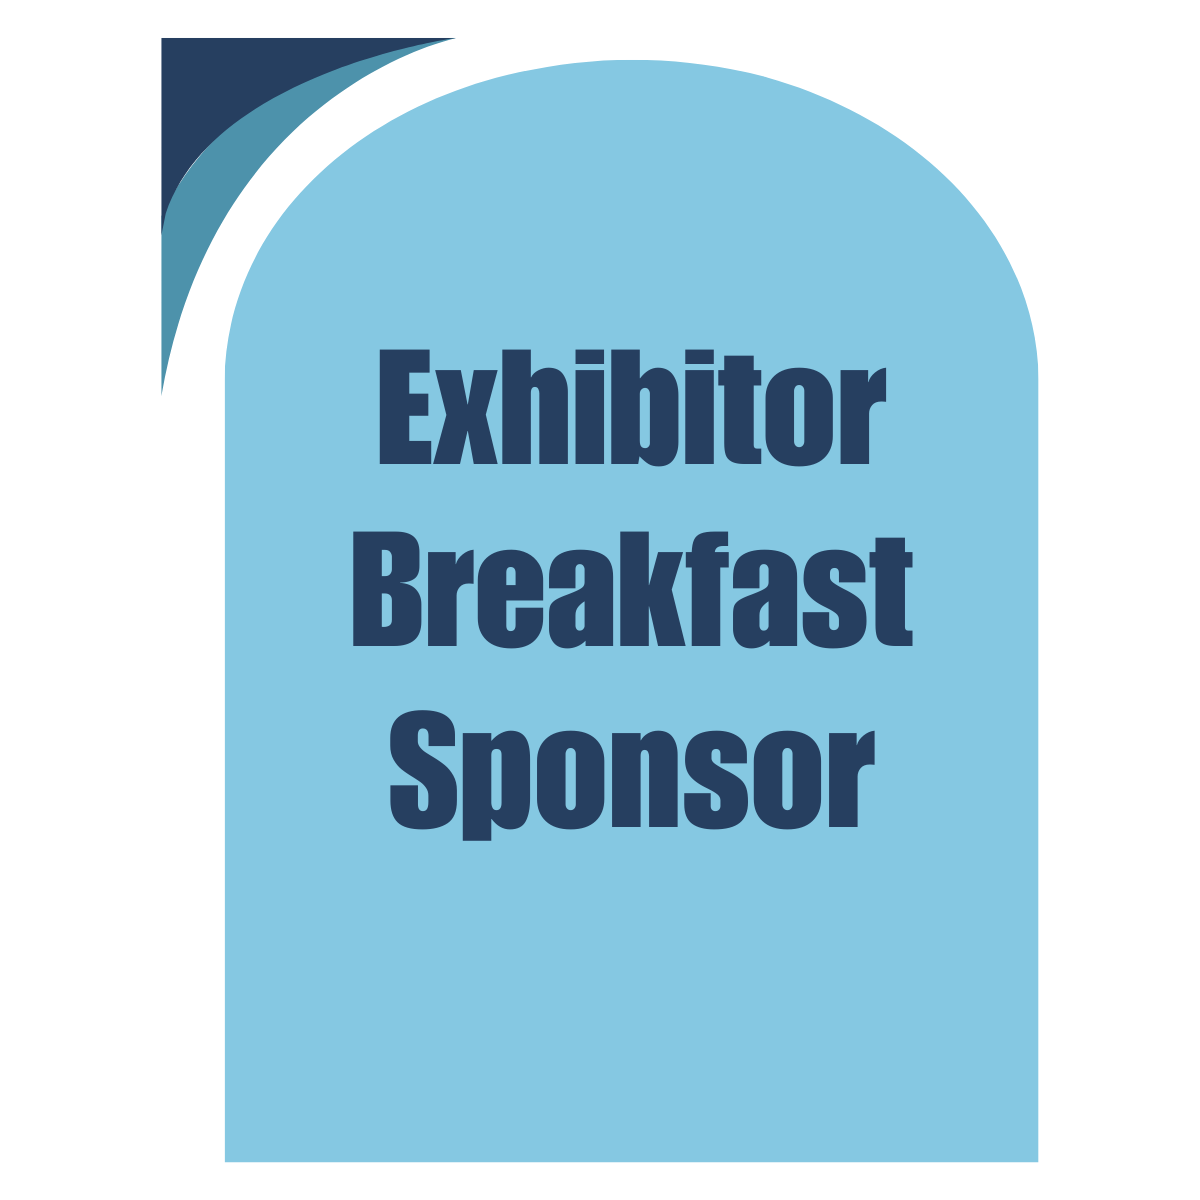 Exhibitor Breakfast Sponsor